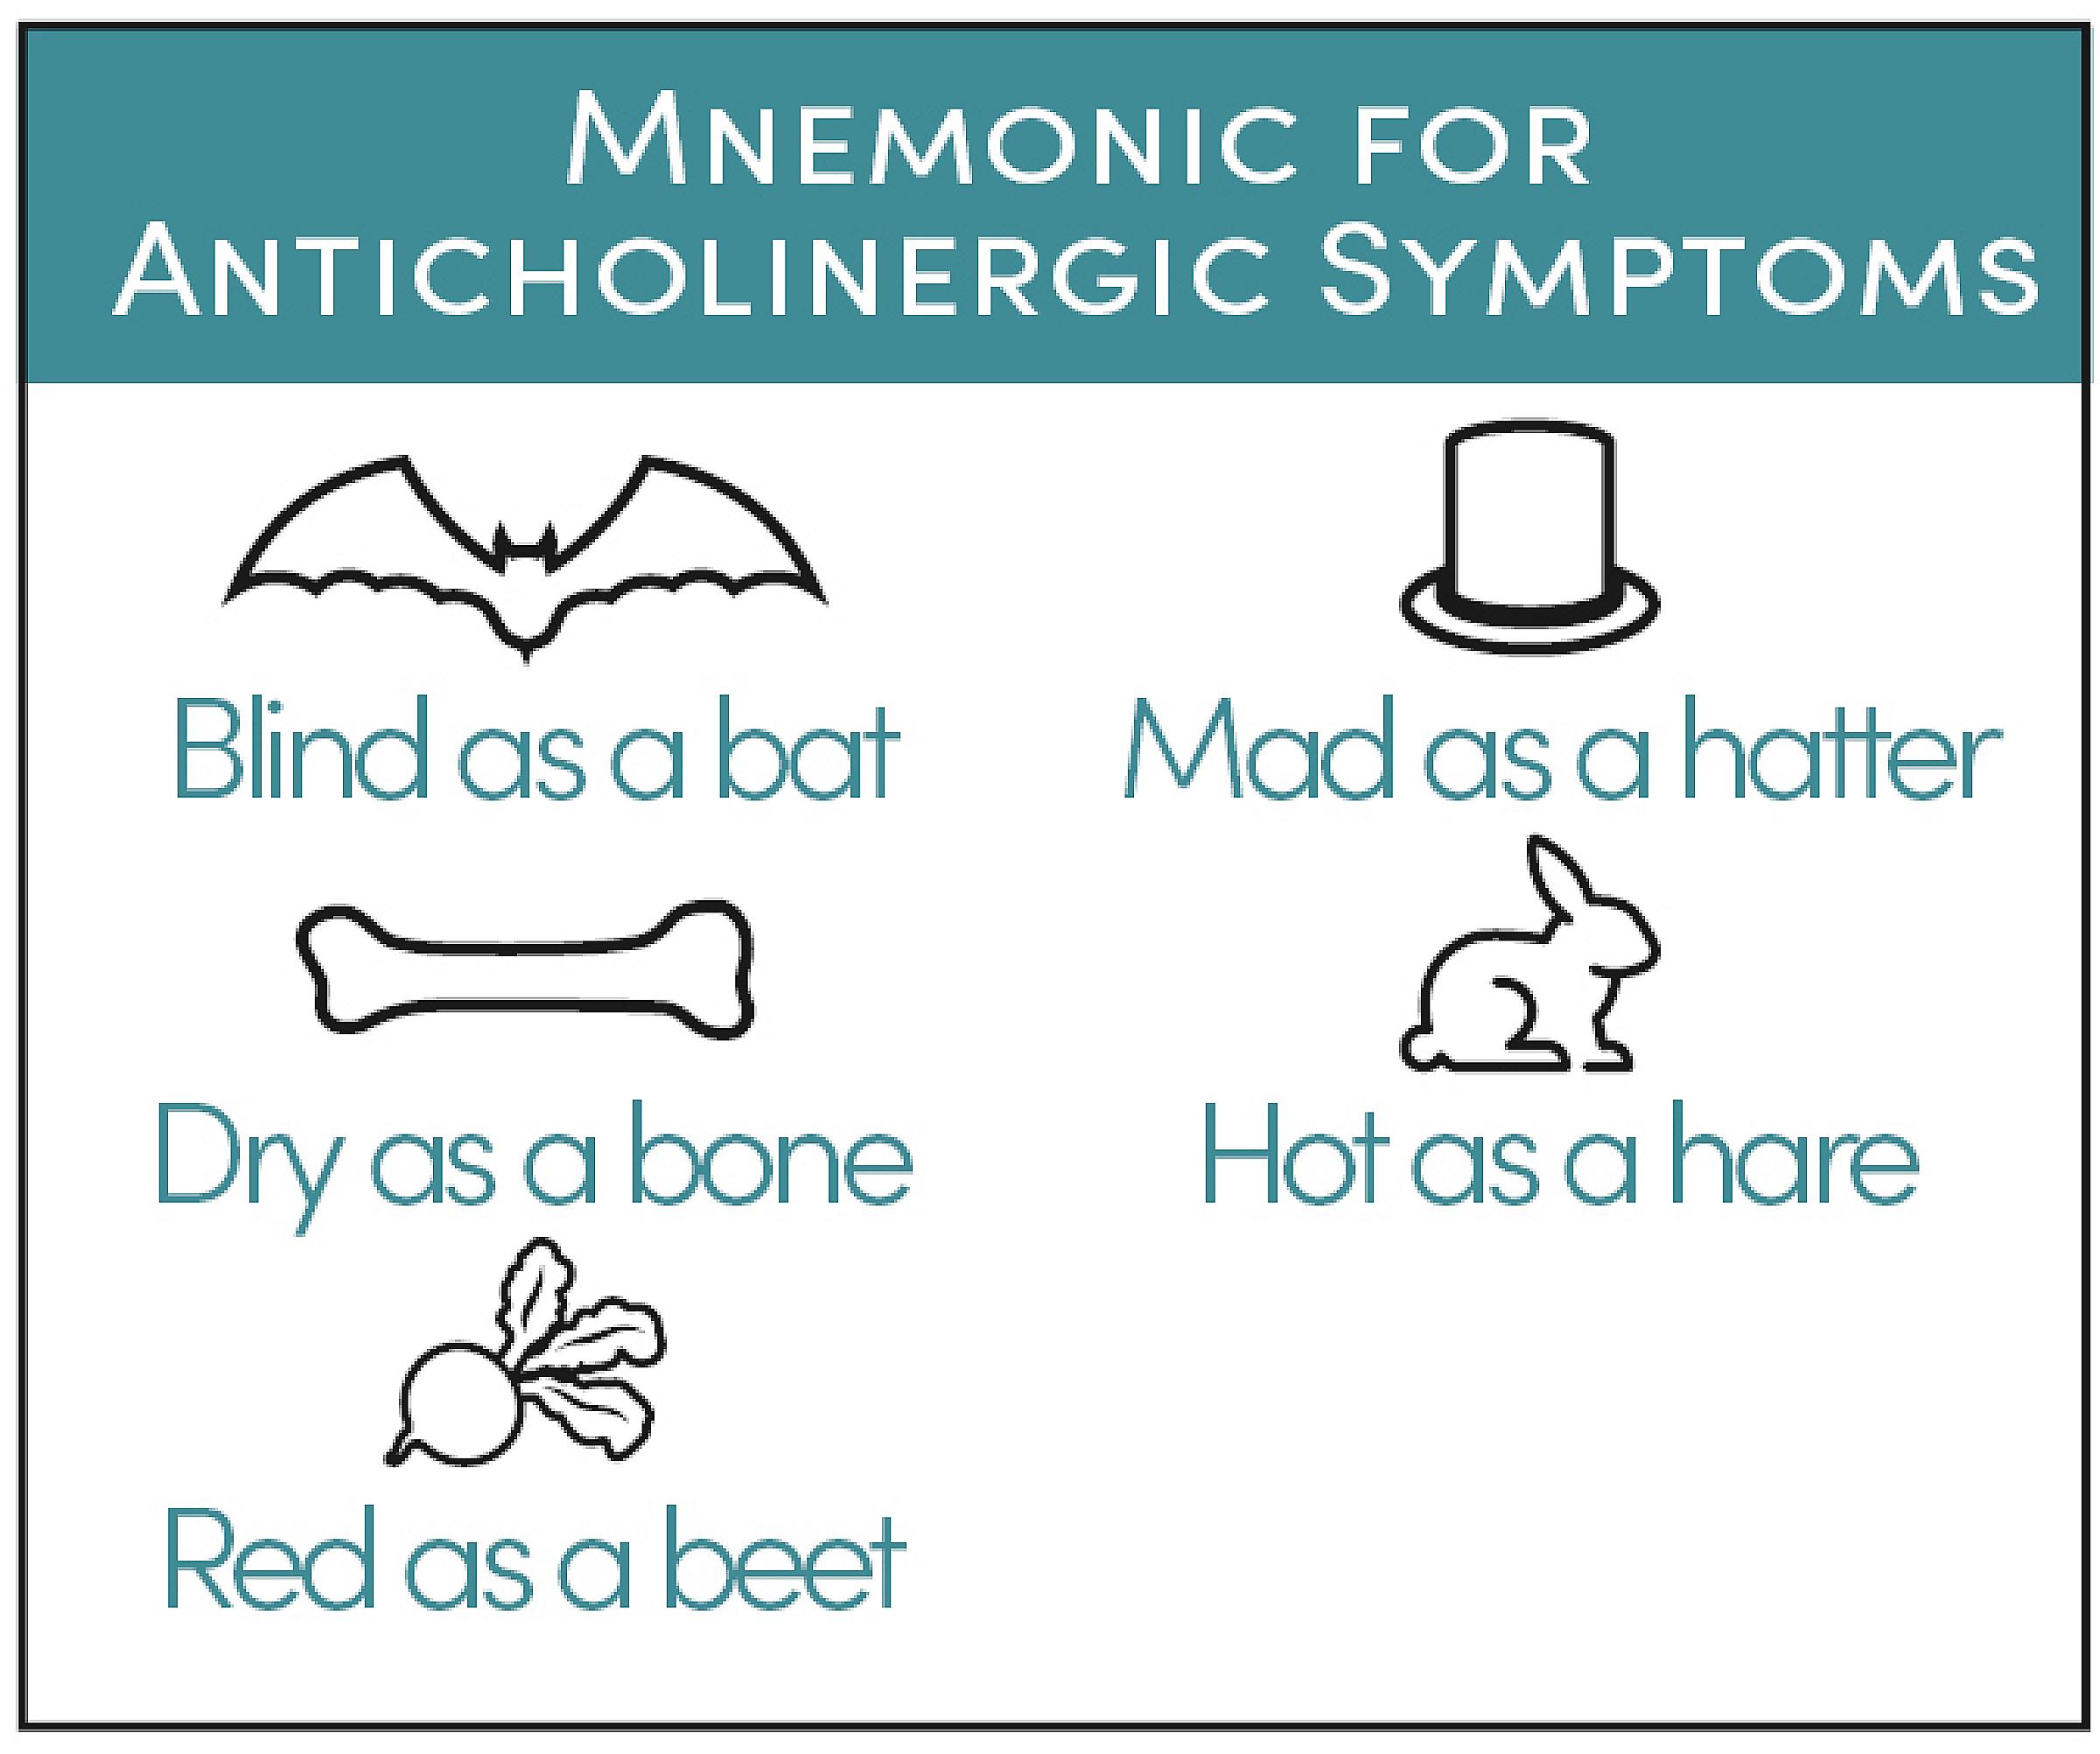 Mnemonic for Anticholinergic Symptoms